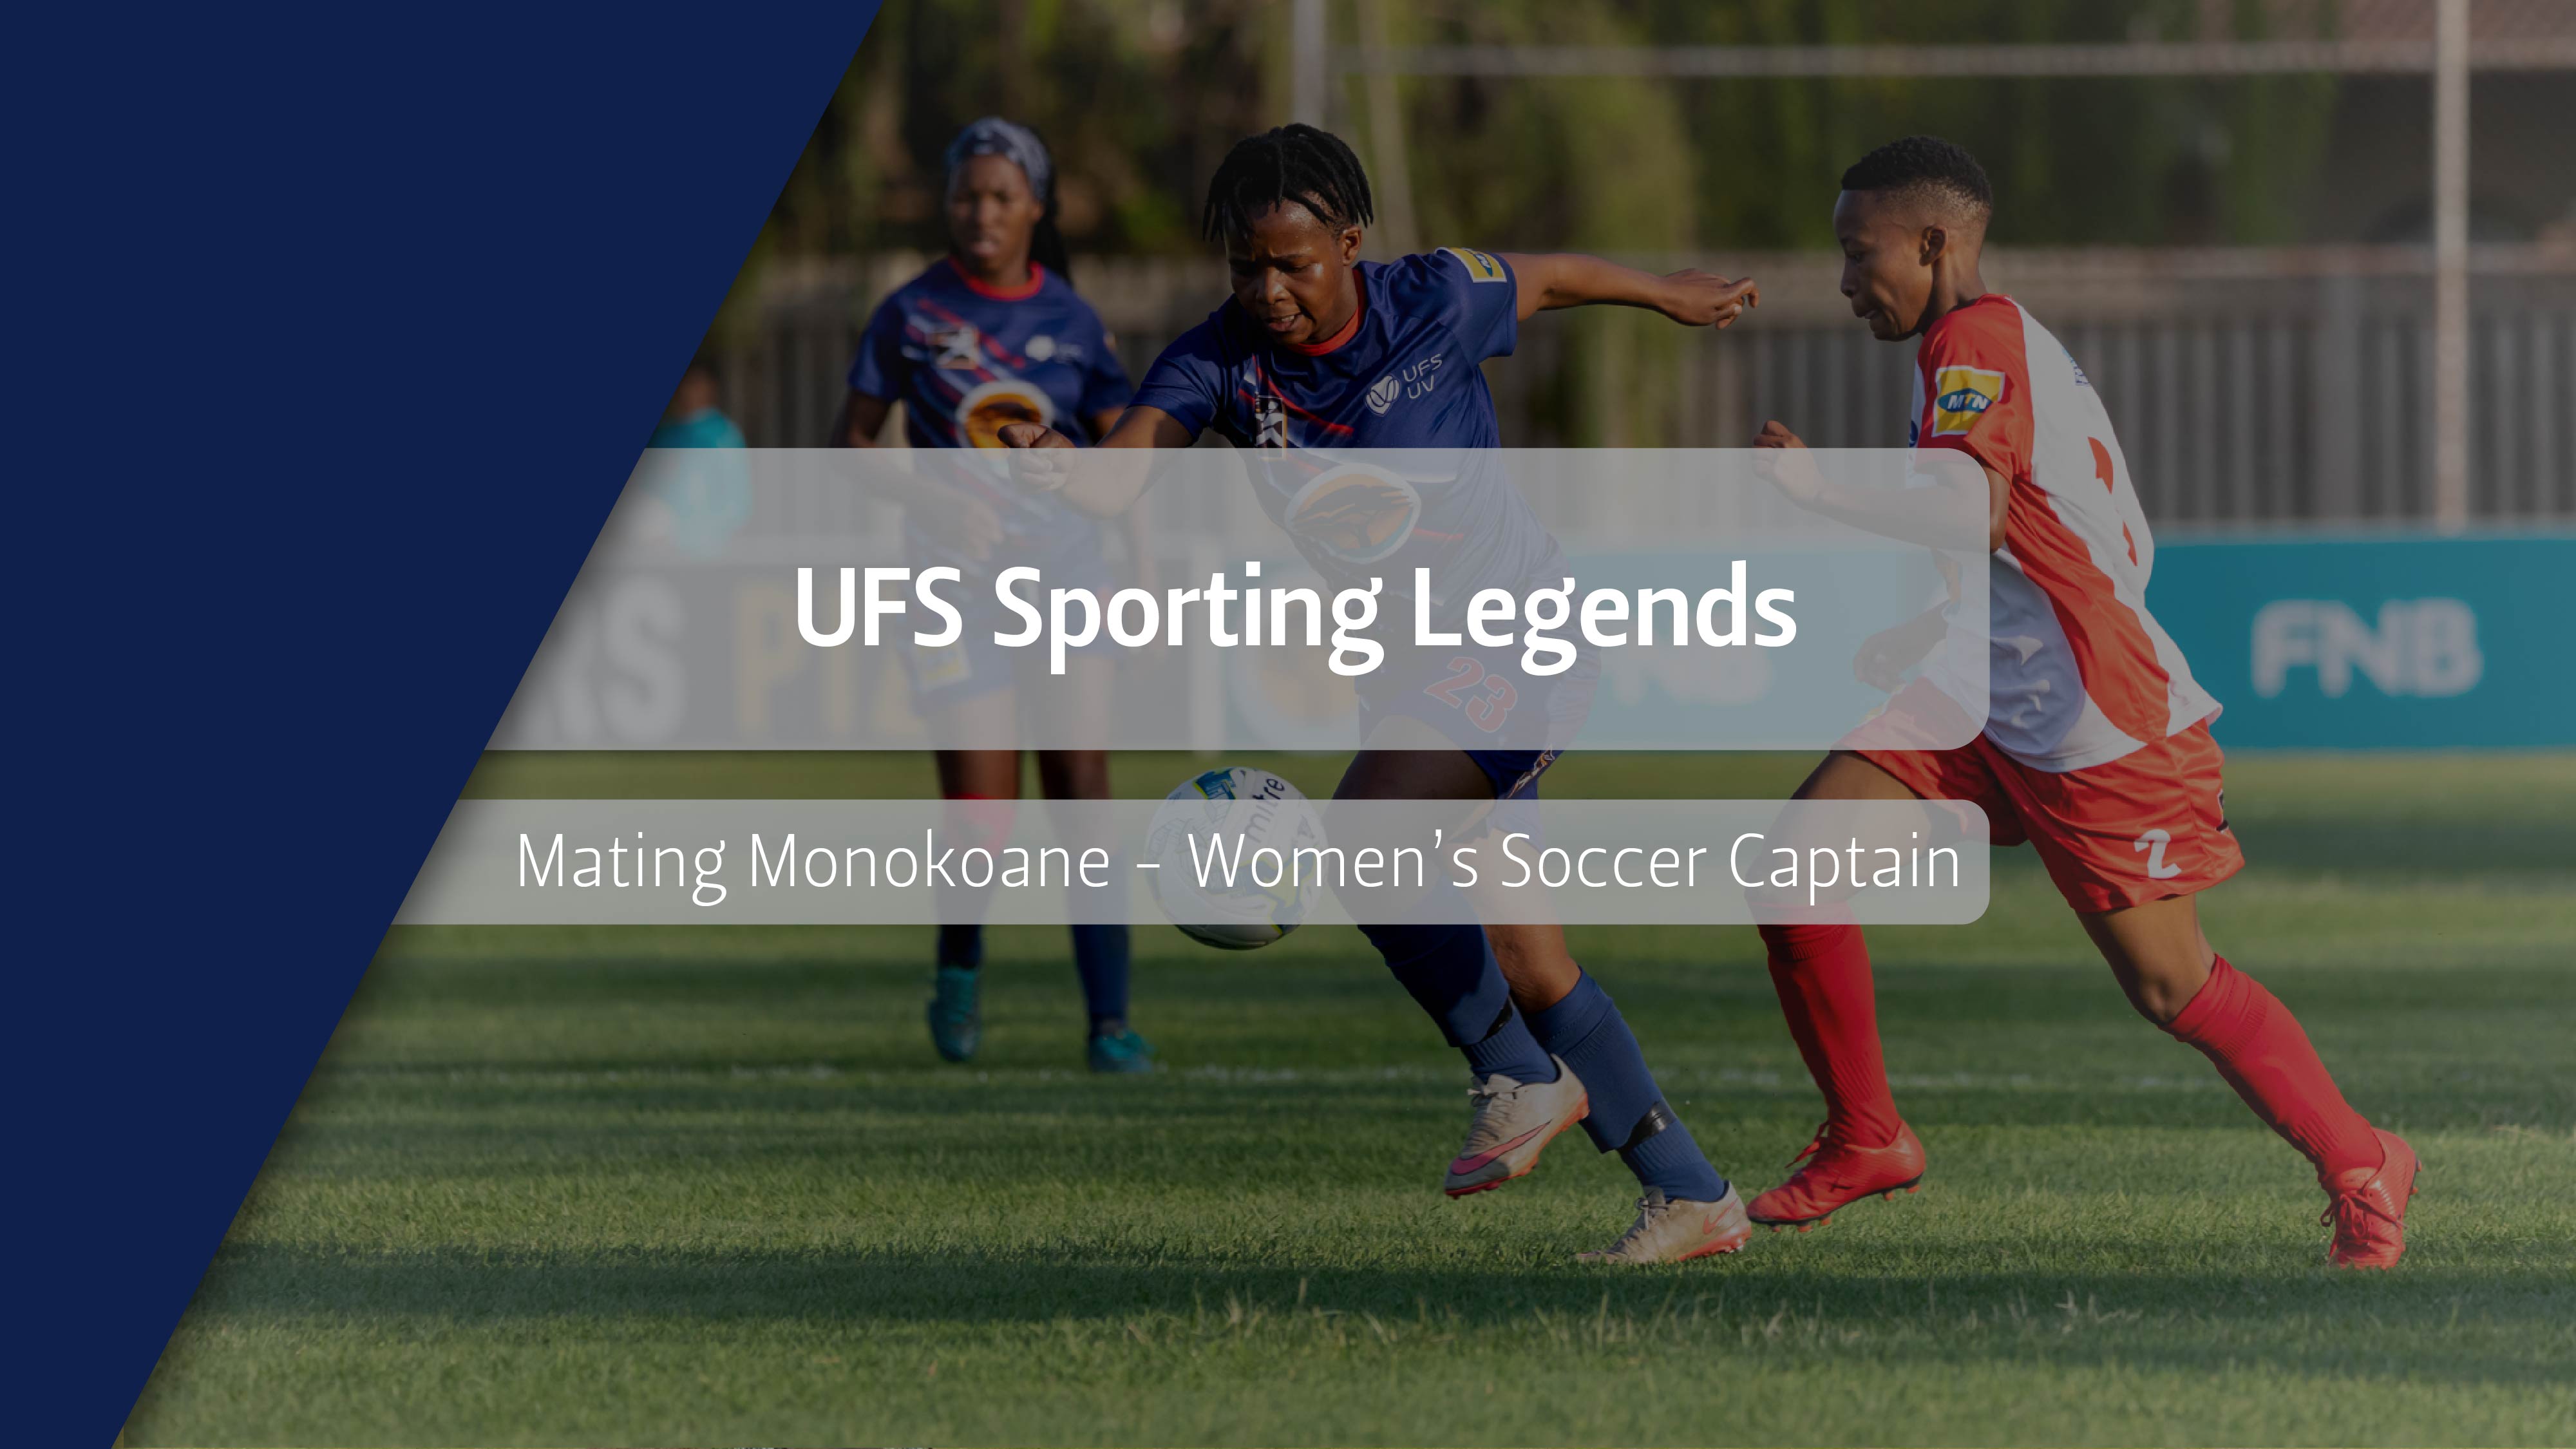 UFS Sporting Legends - Mating Monokoane